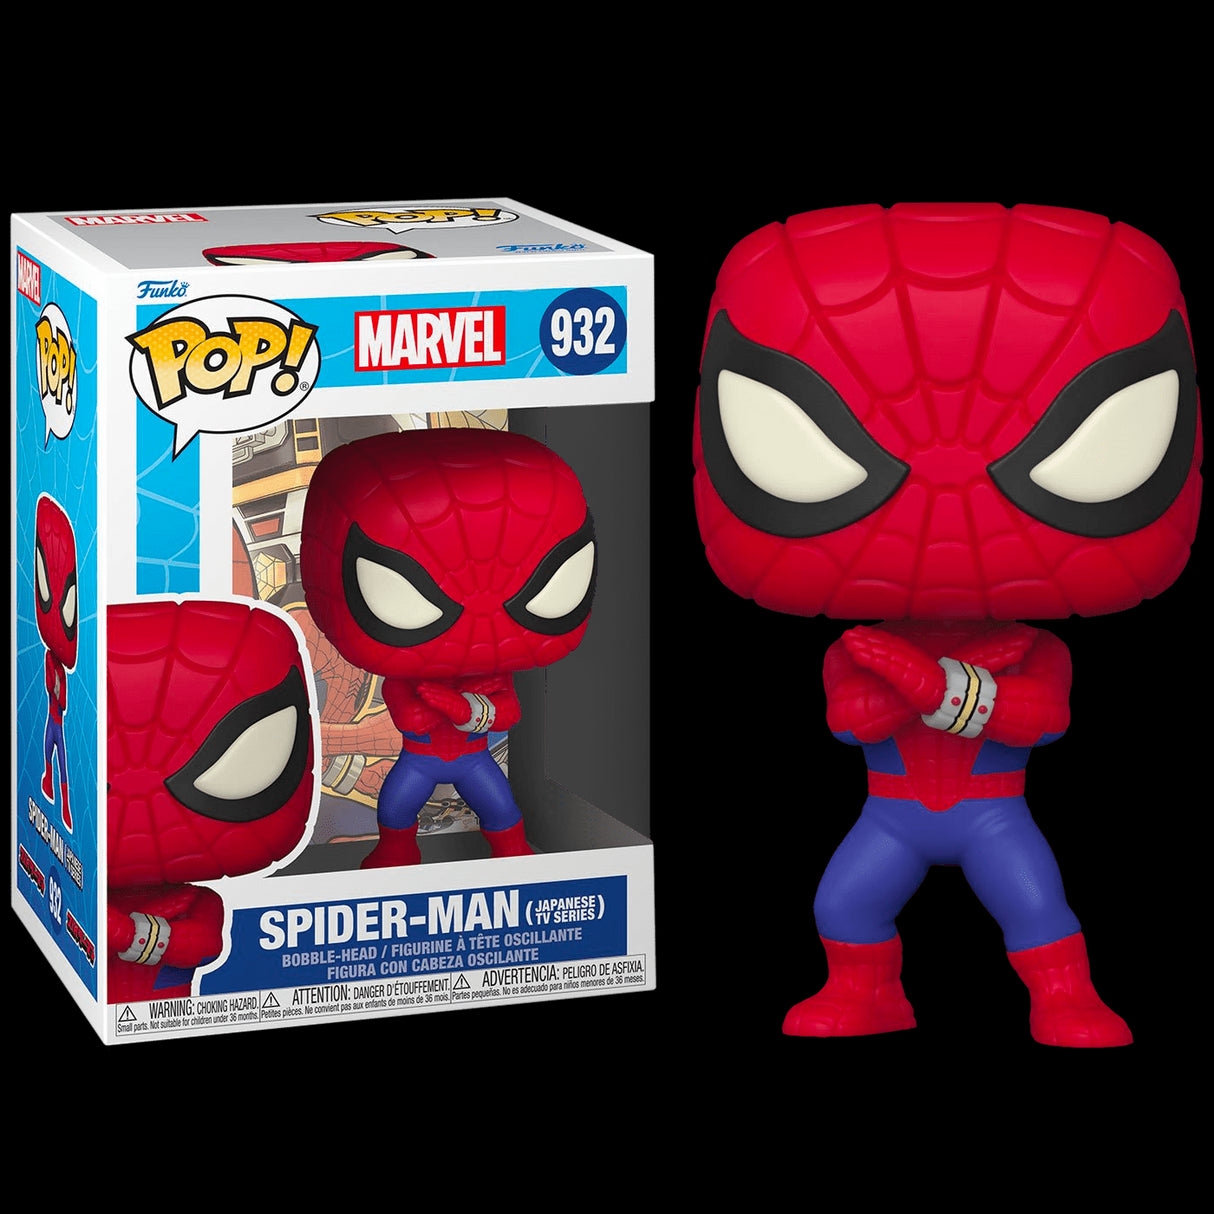 Pop! Marvel Spider-Man Japanese TV Series Vinyl Figure